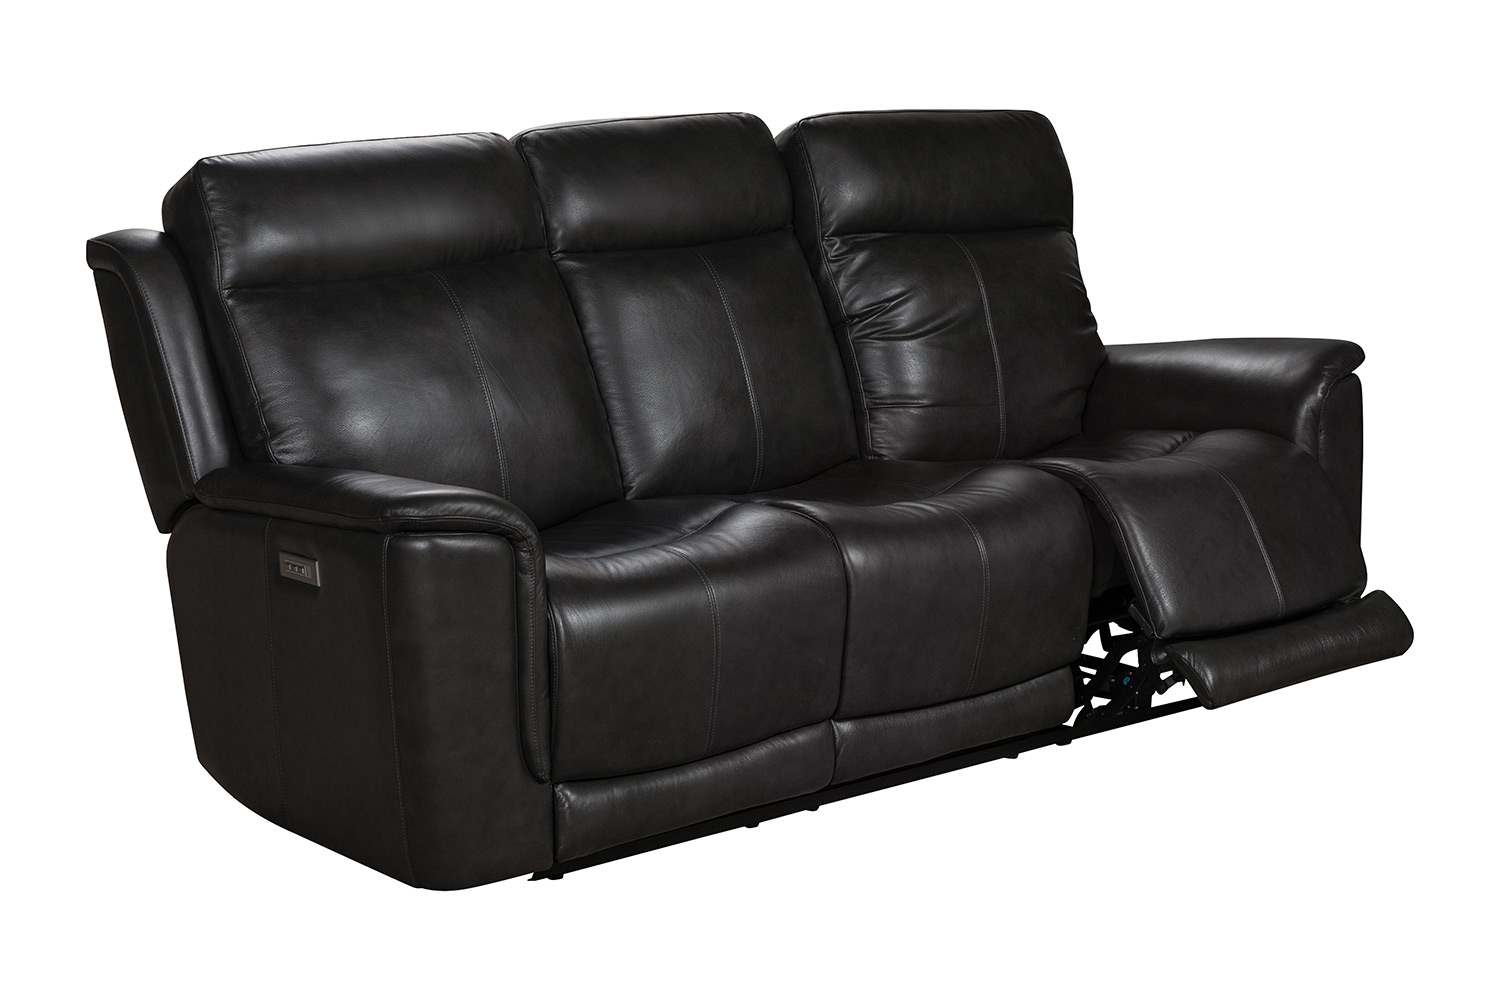 Barcalounger Burbank Power Reclining Sofa with Power Head Rests and Lumbar - Matteo Smokey Gray/Leather match